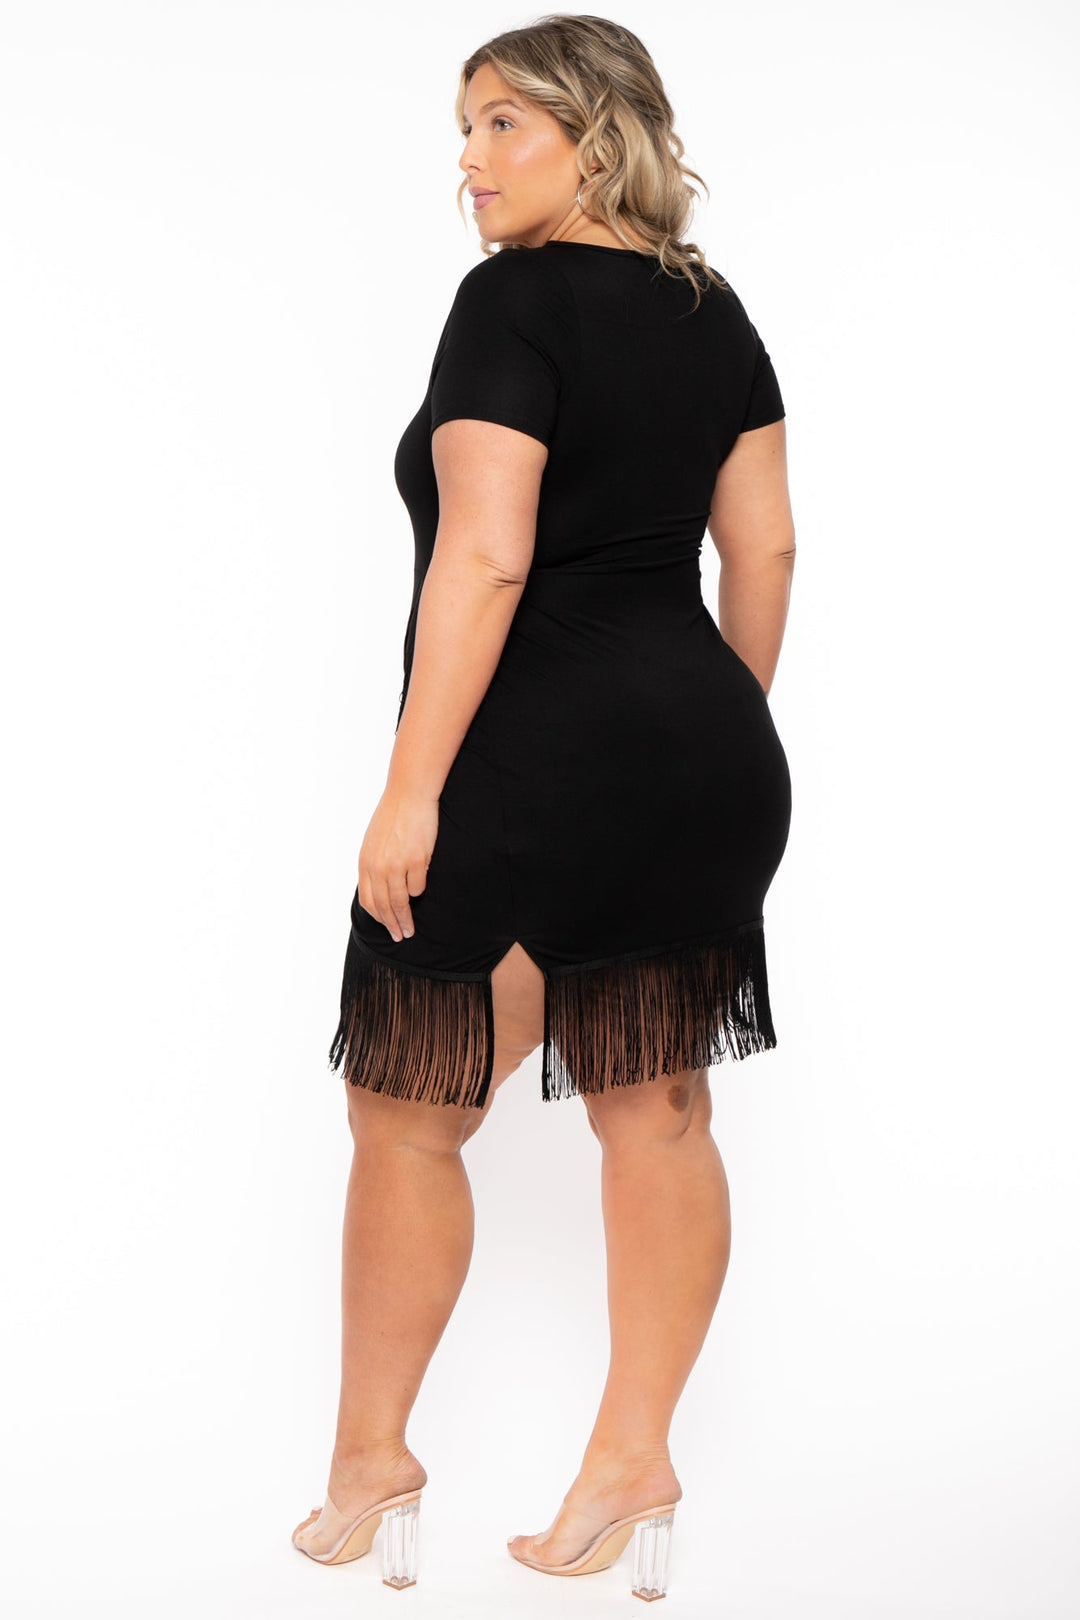 Curvy Sense Dresses Plus Size Mamacita Fringe Dress - Black